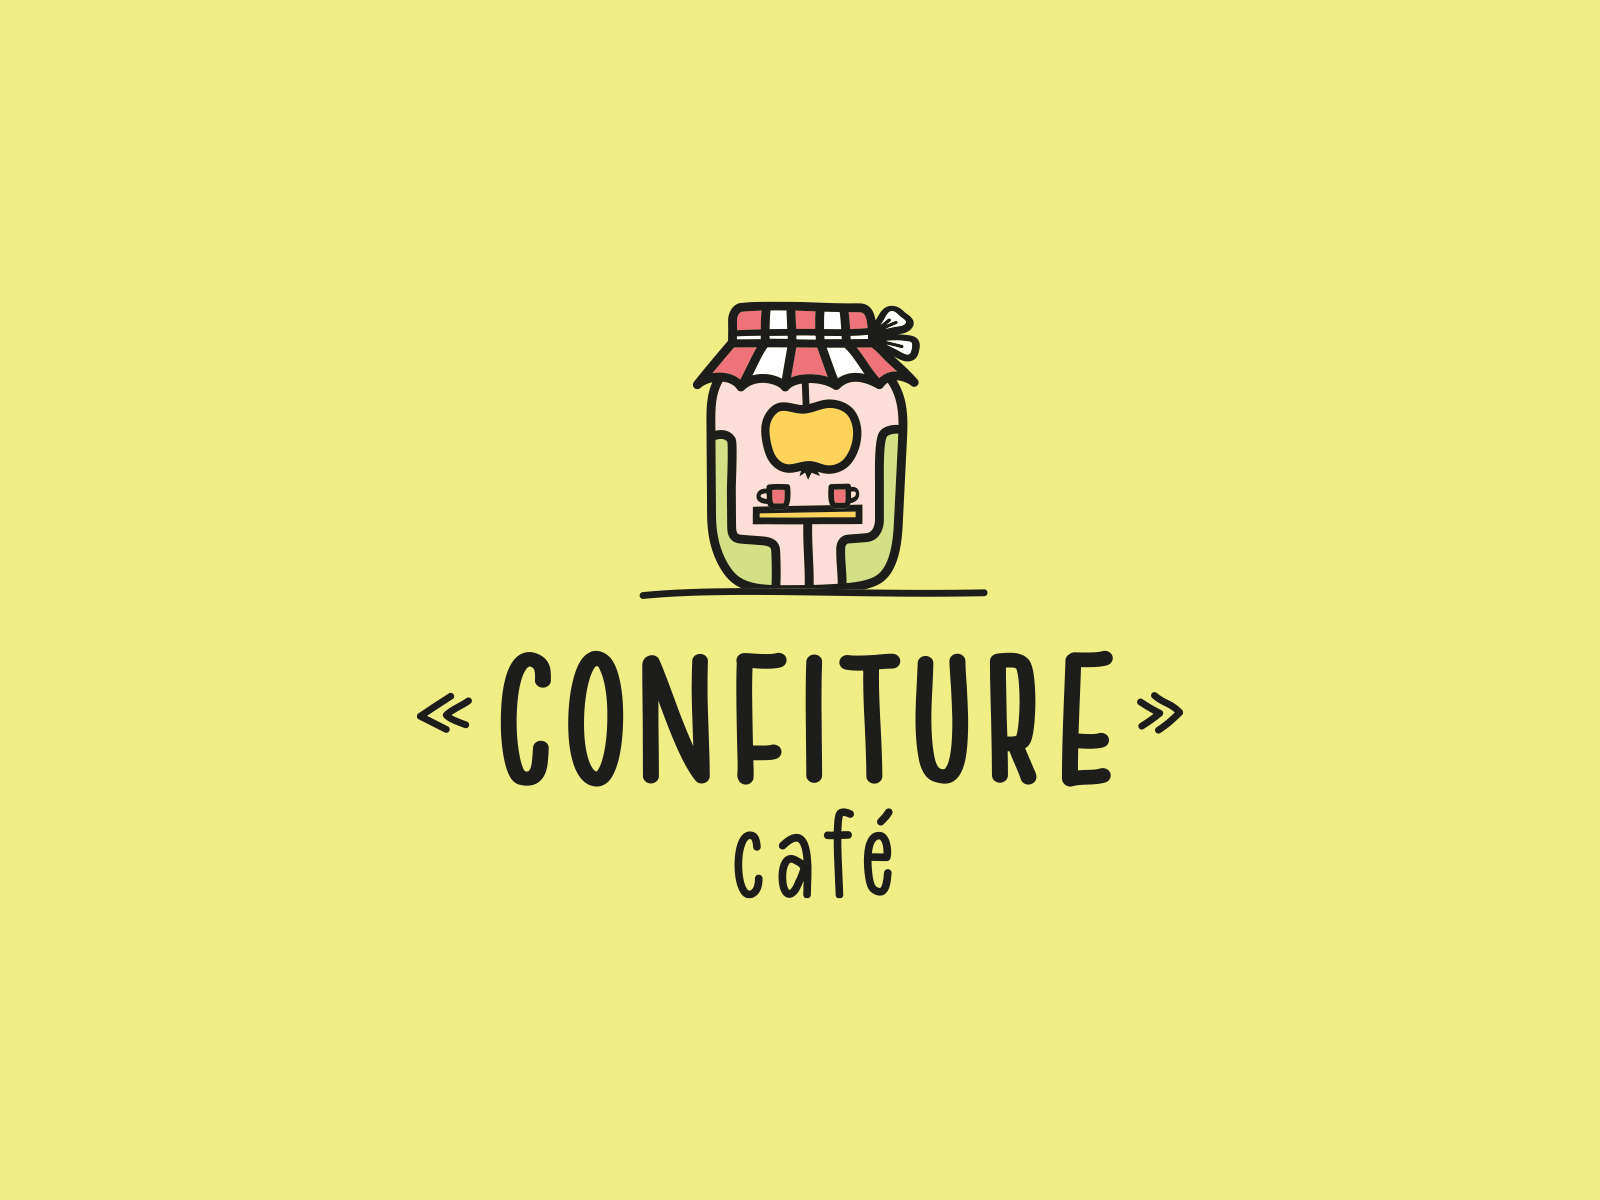 Confiture Cafe by Regina Maller on Dribbble